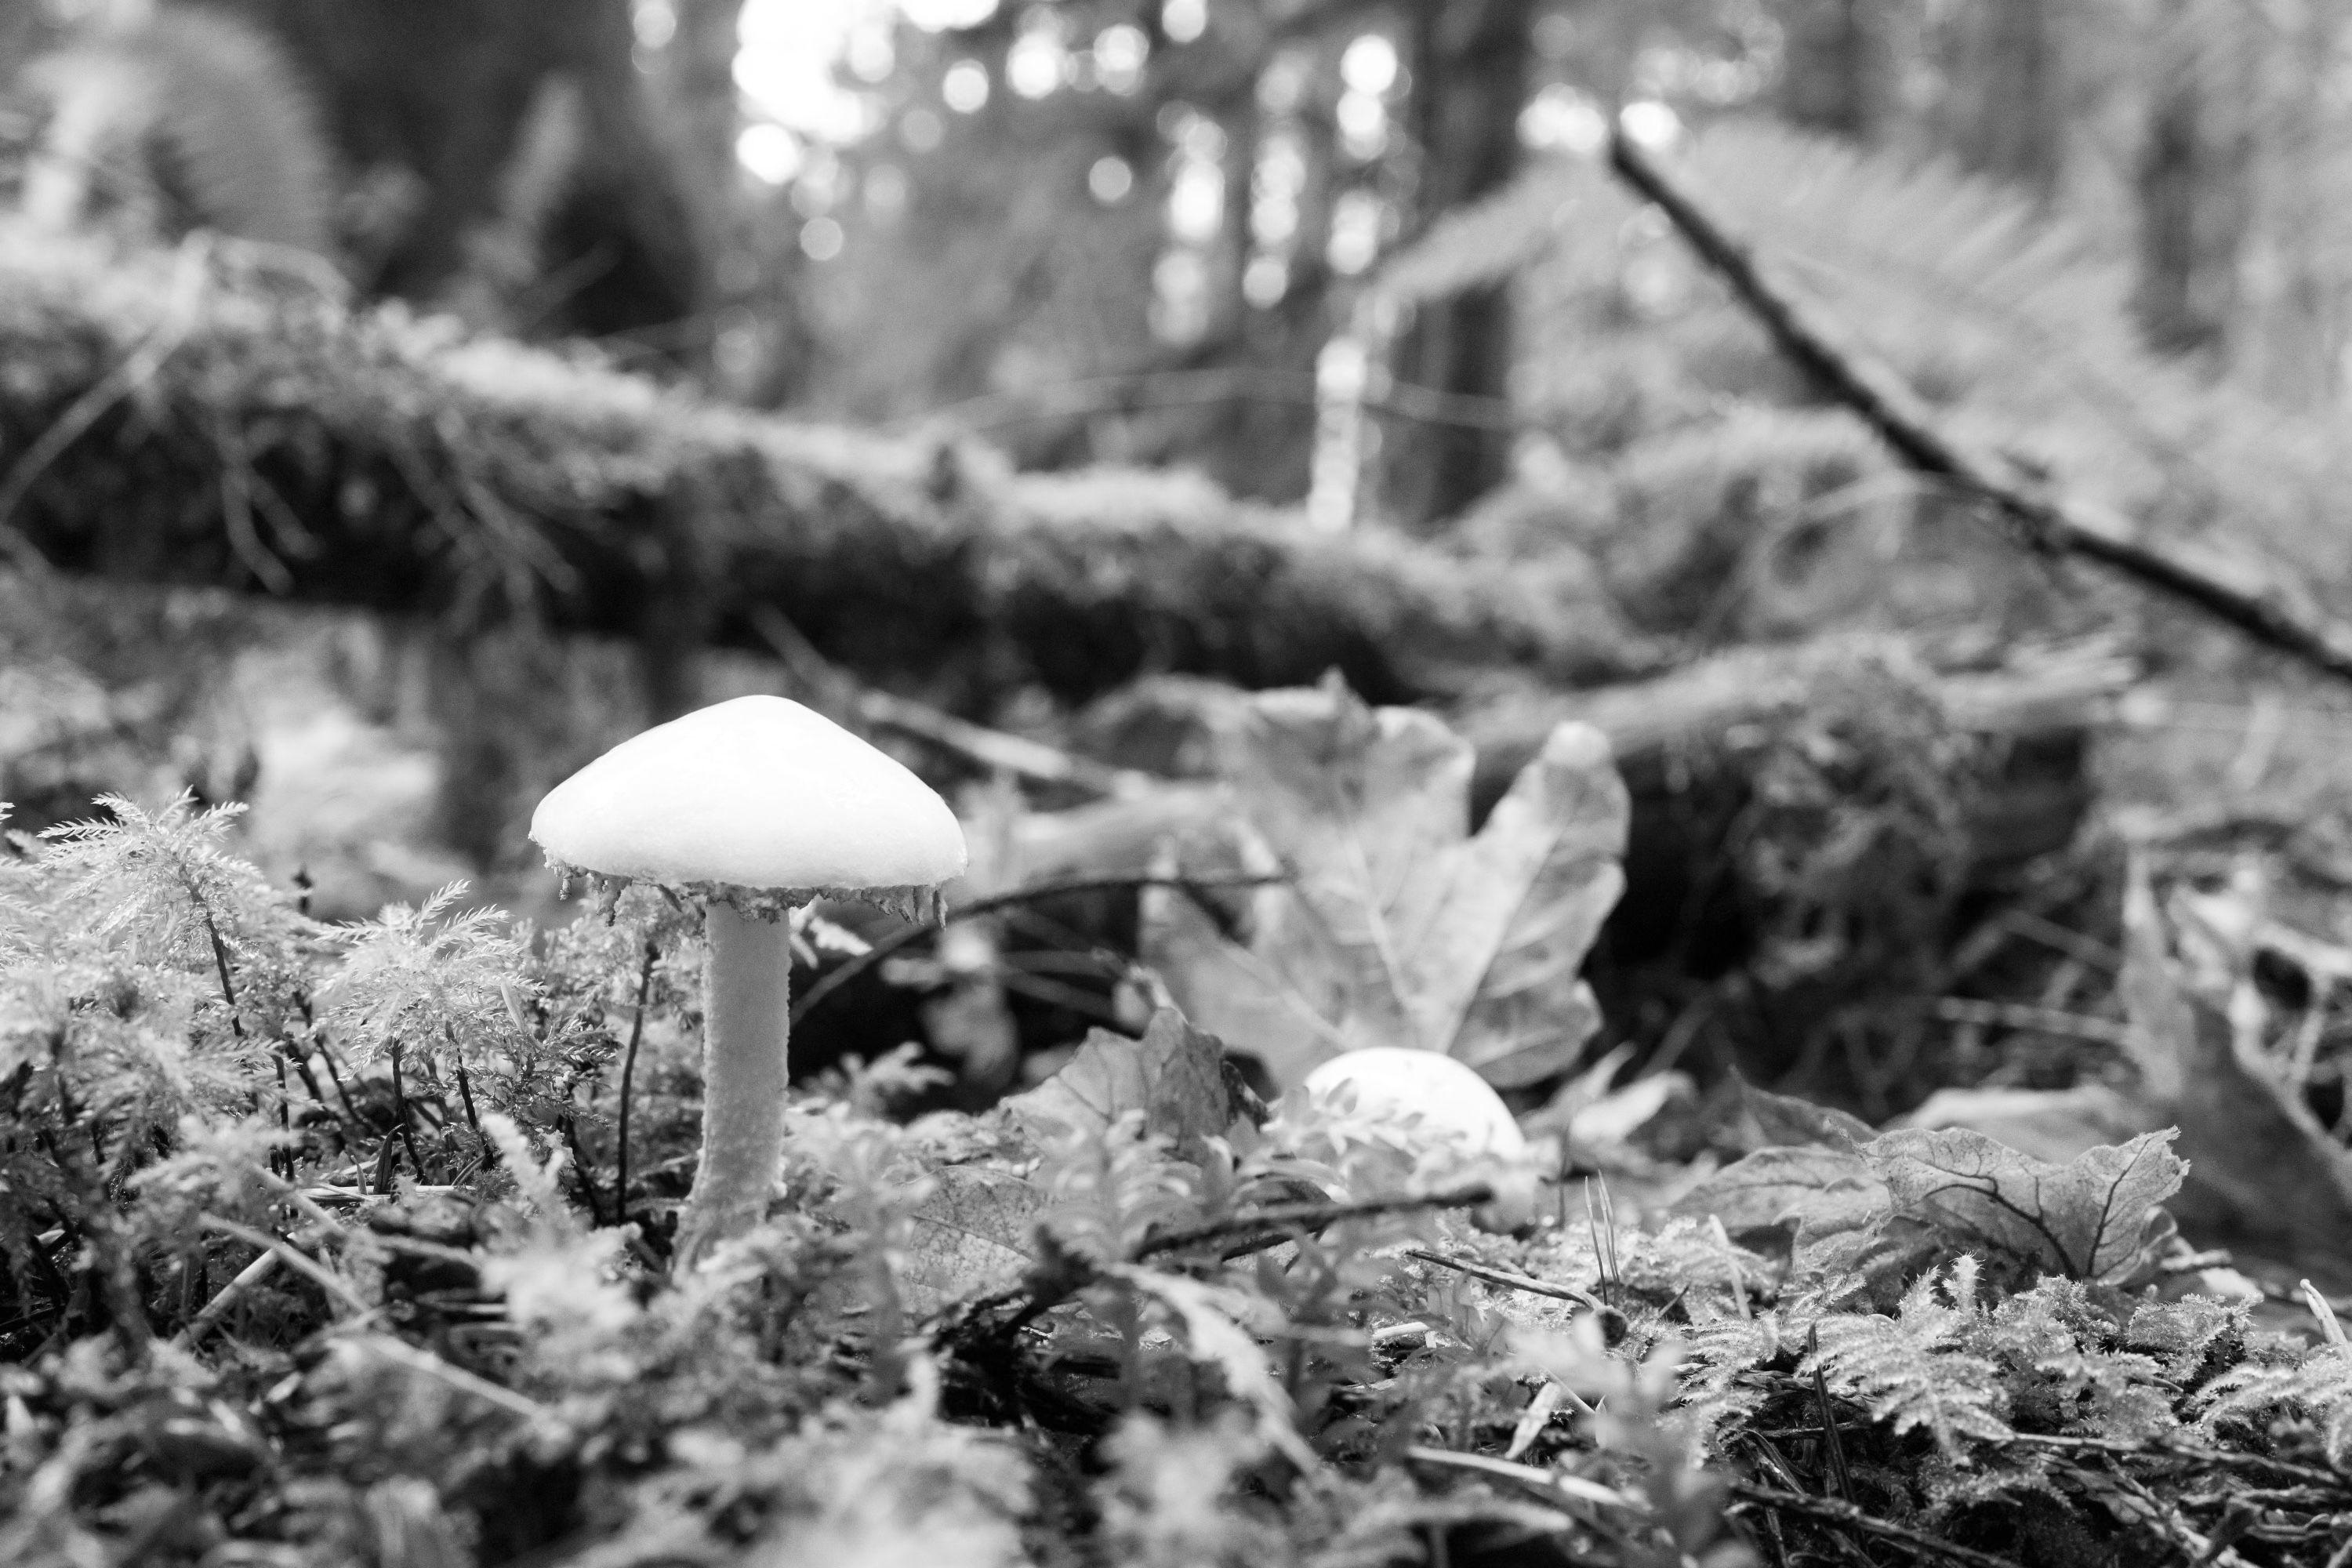 Richard Scudder Black and White Photograph - Rainforest Mushroom, Photograph, Silver Hal/Gelatin